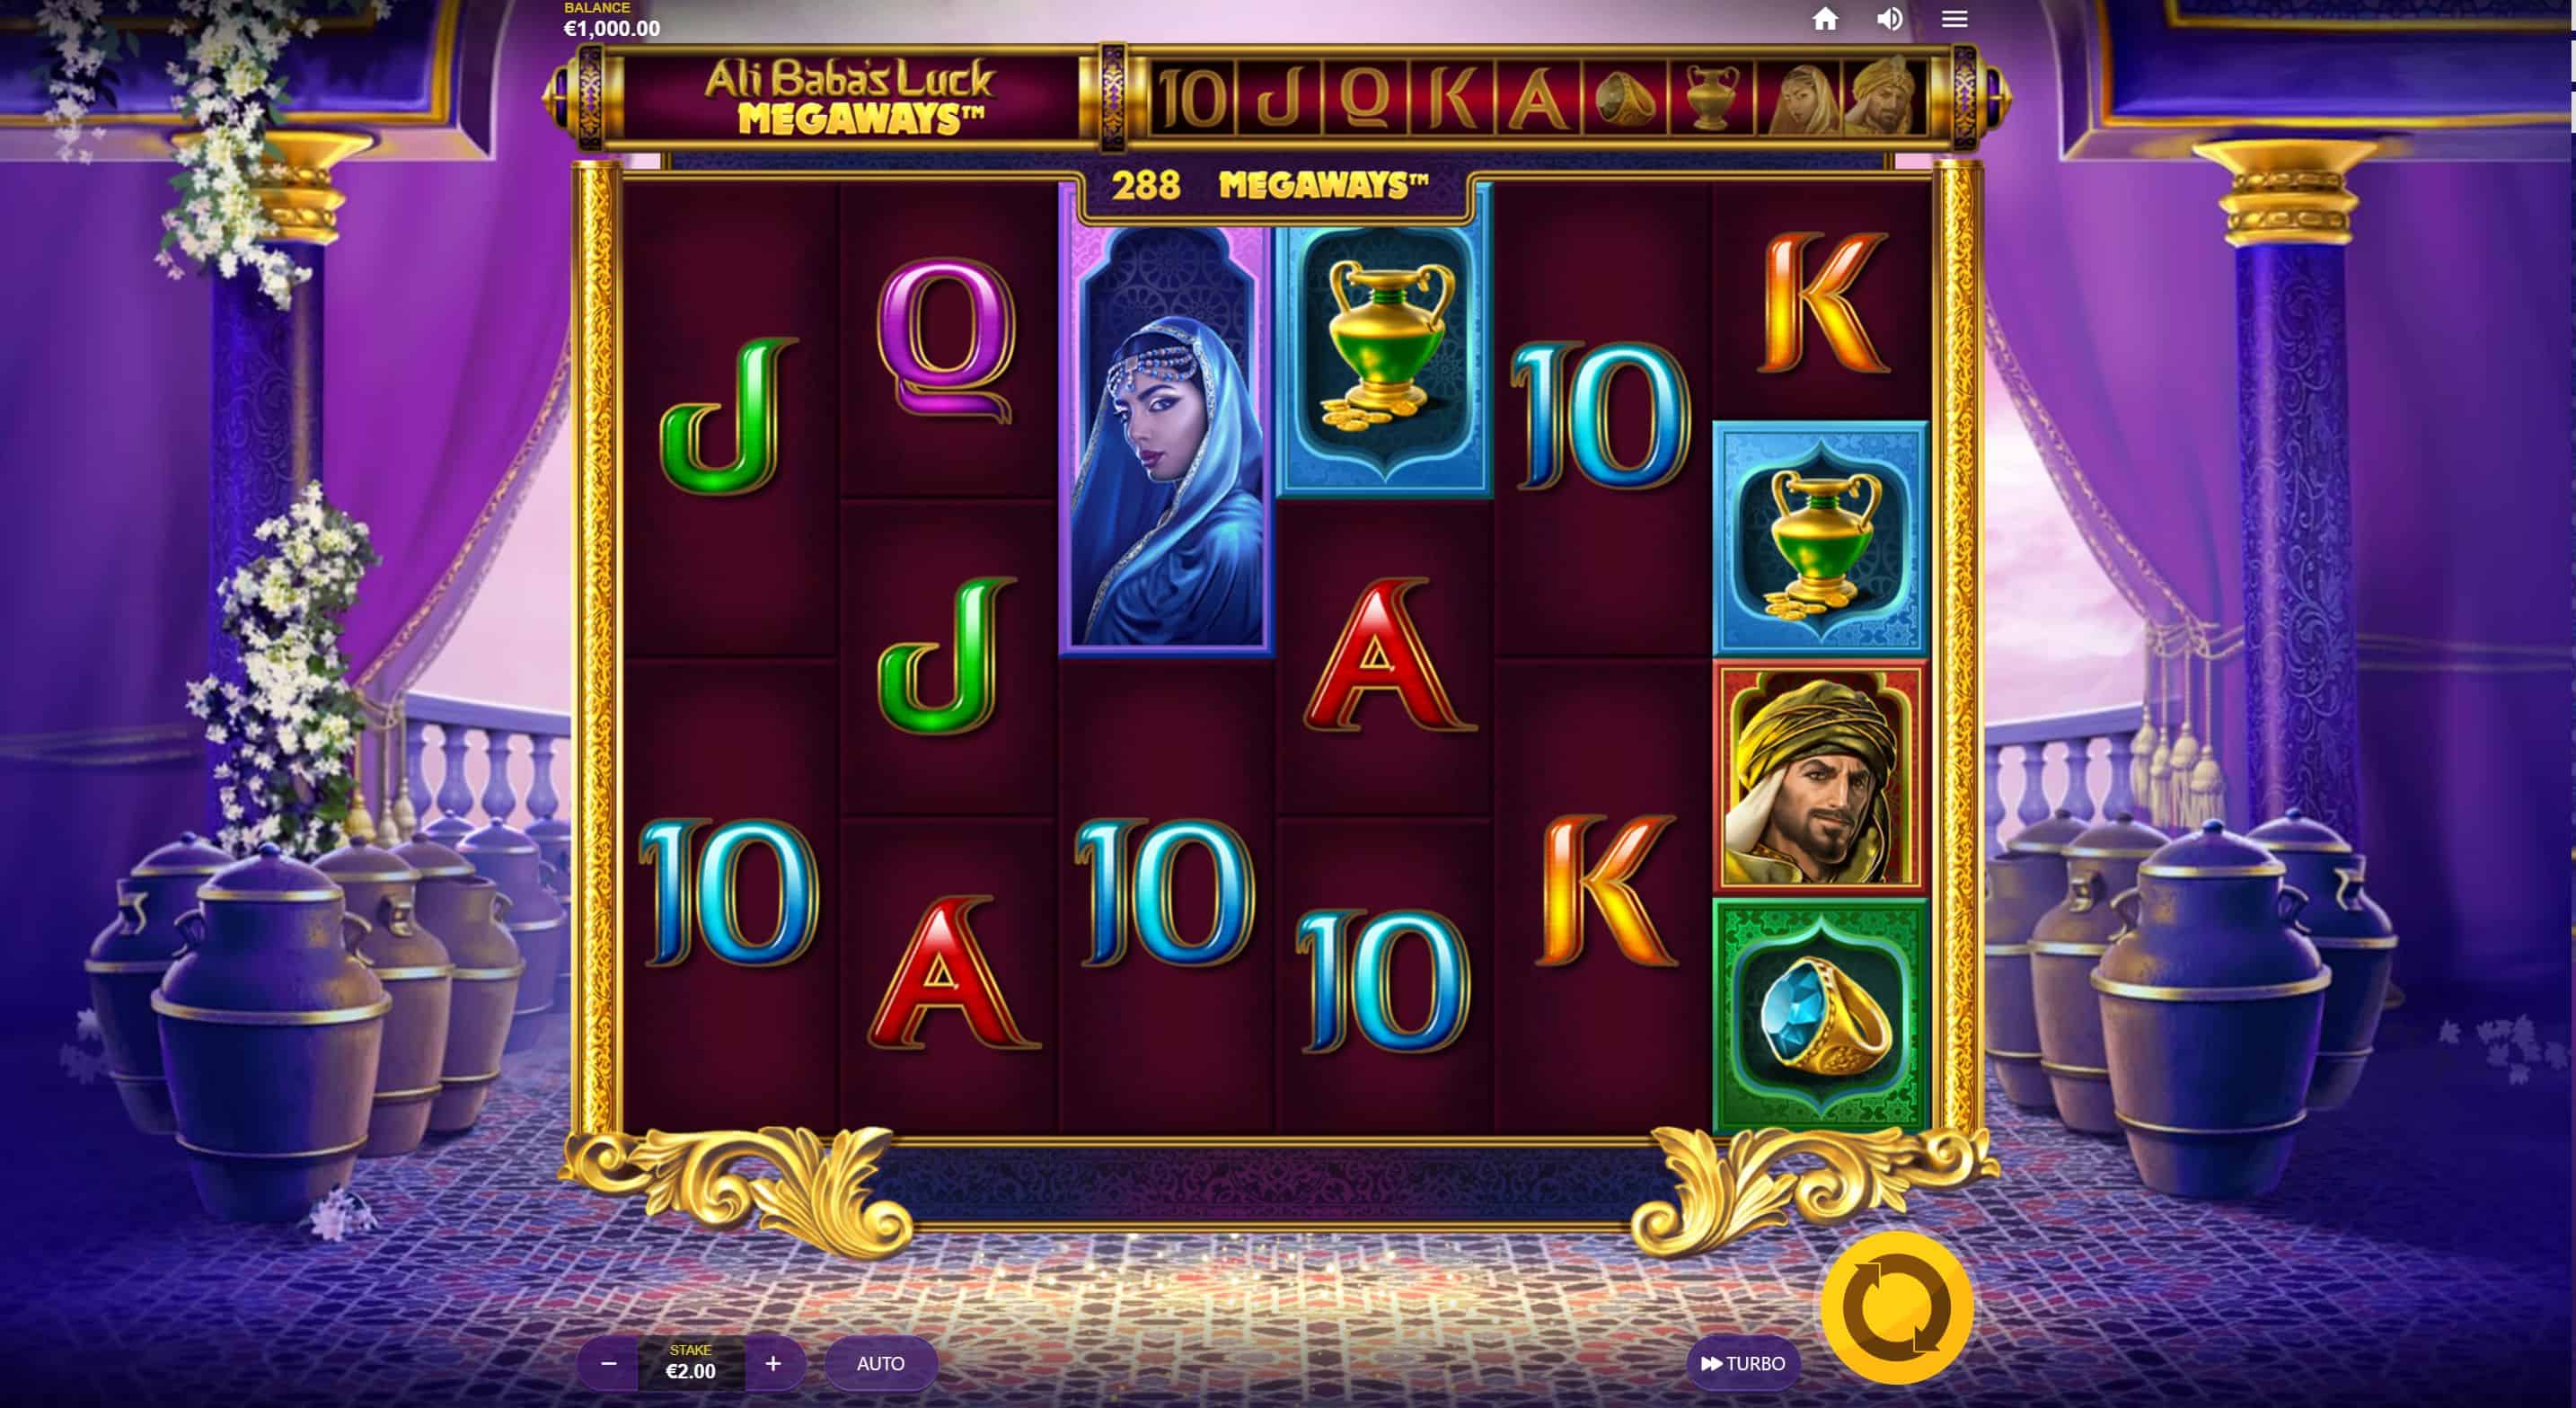 Ali Babas Luck Megaways Slot Game Free Play at Casino Ireland 01